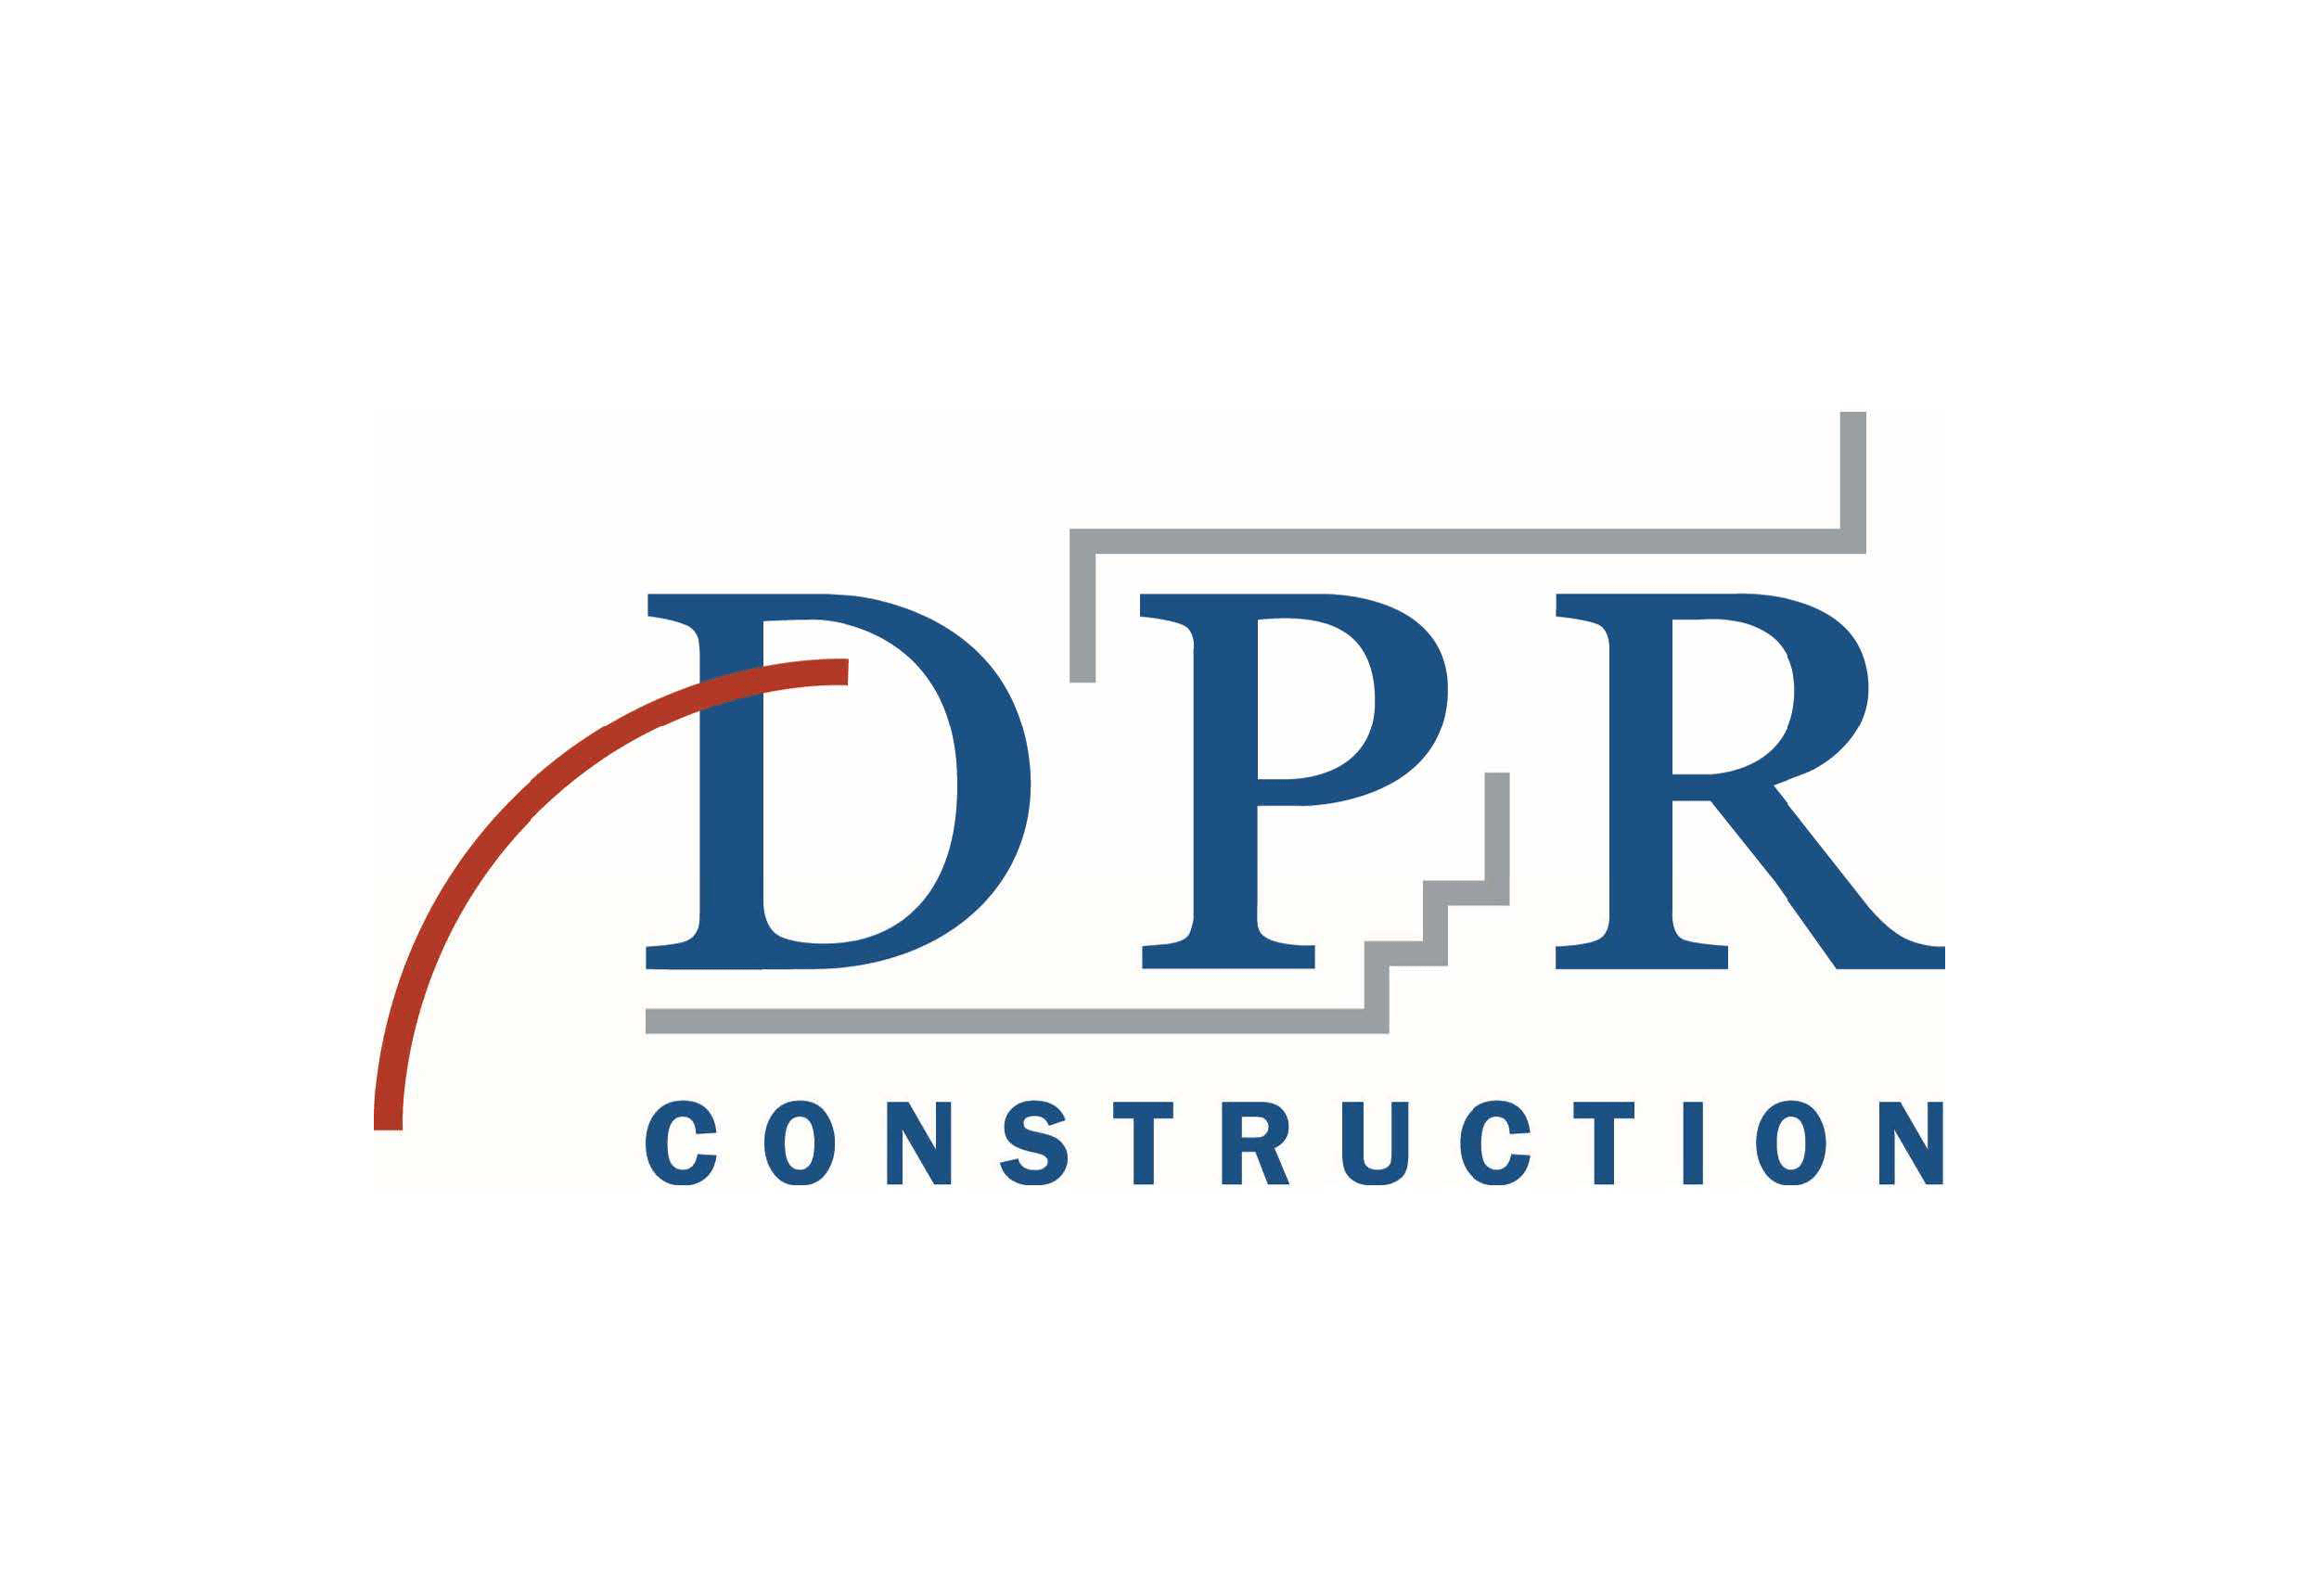 DPR Logo - DPR logo | Dwglogo